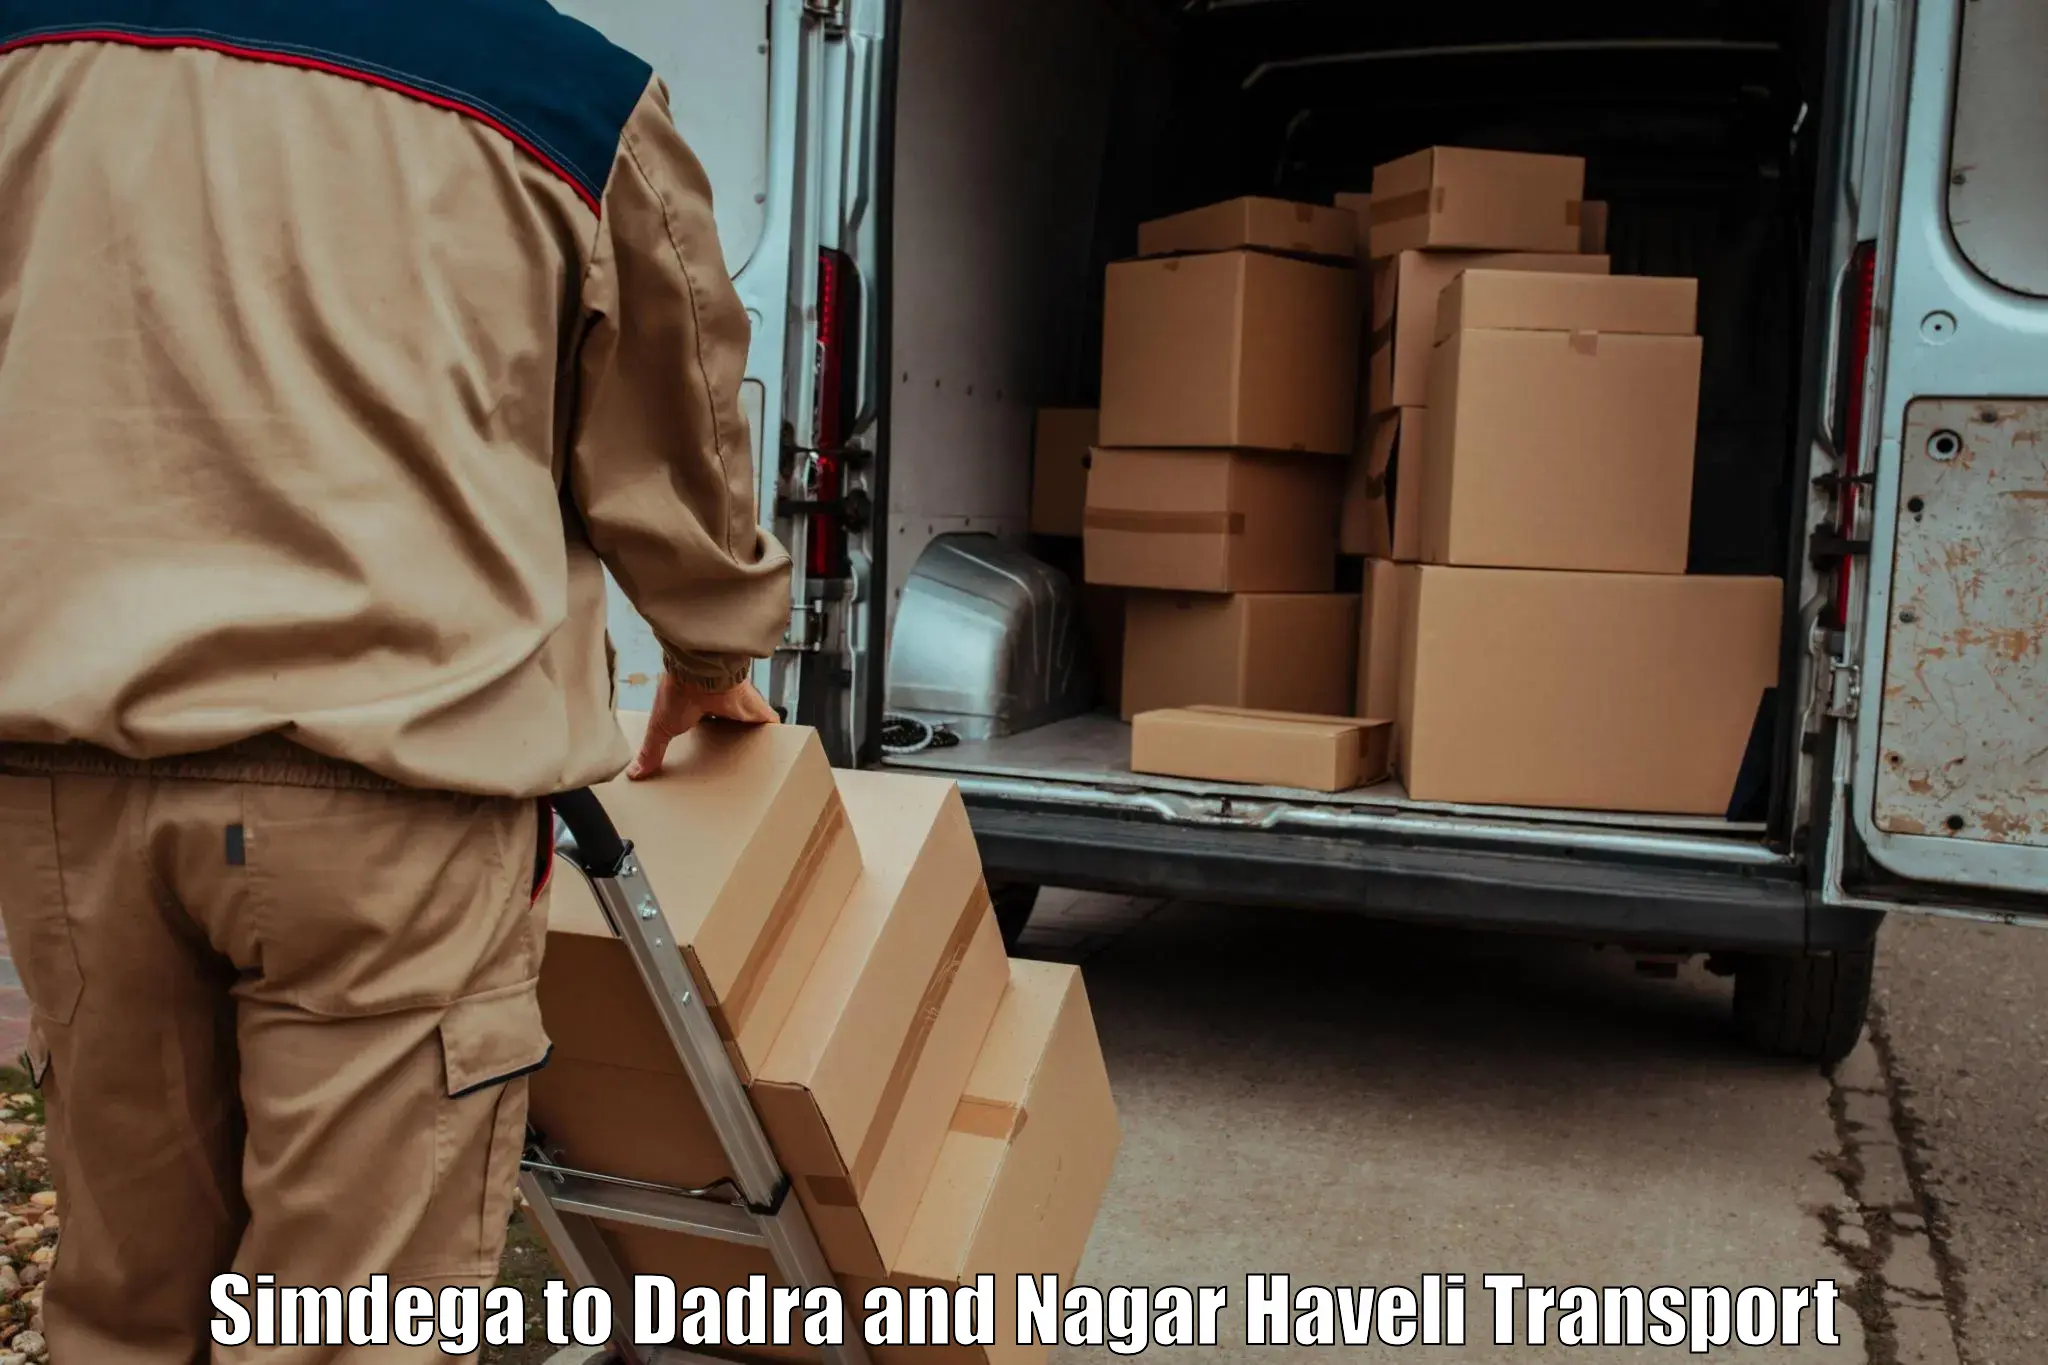 Transport shared services in Simdega to Dadra and Nagar Haveli